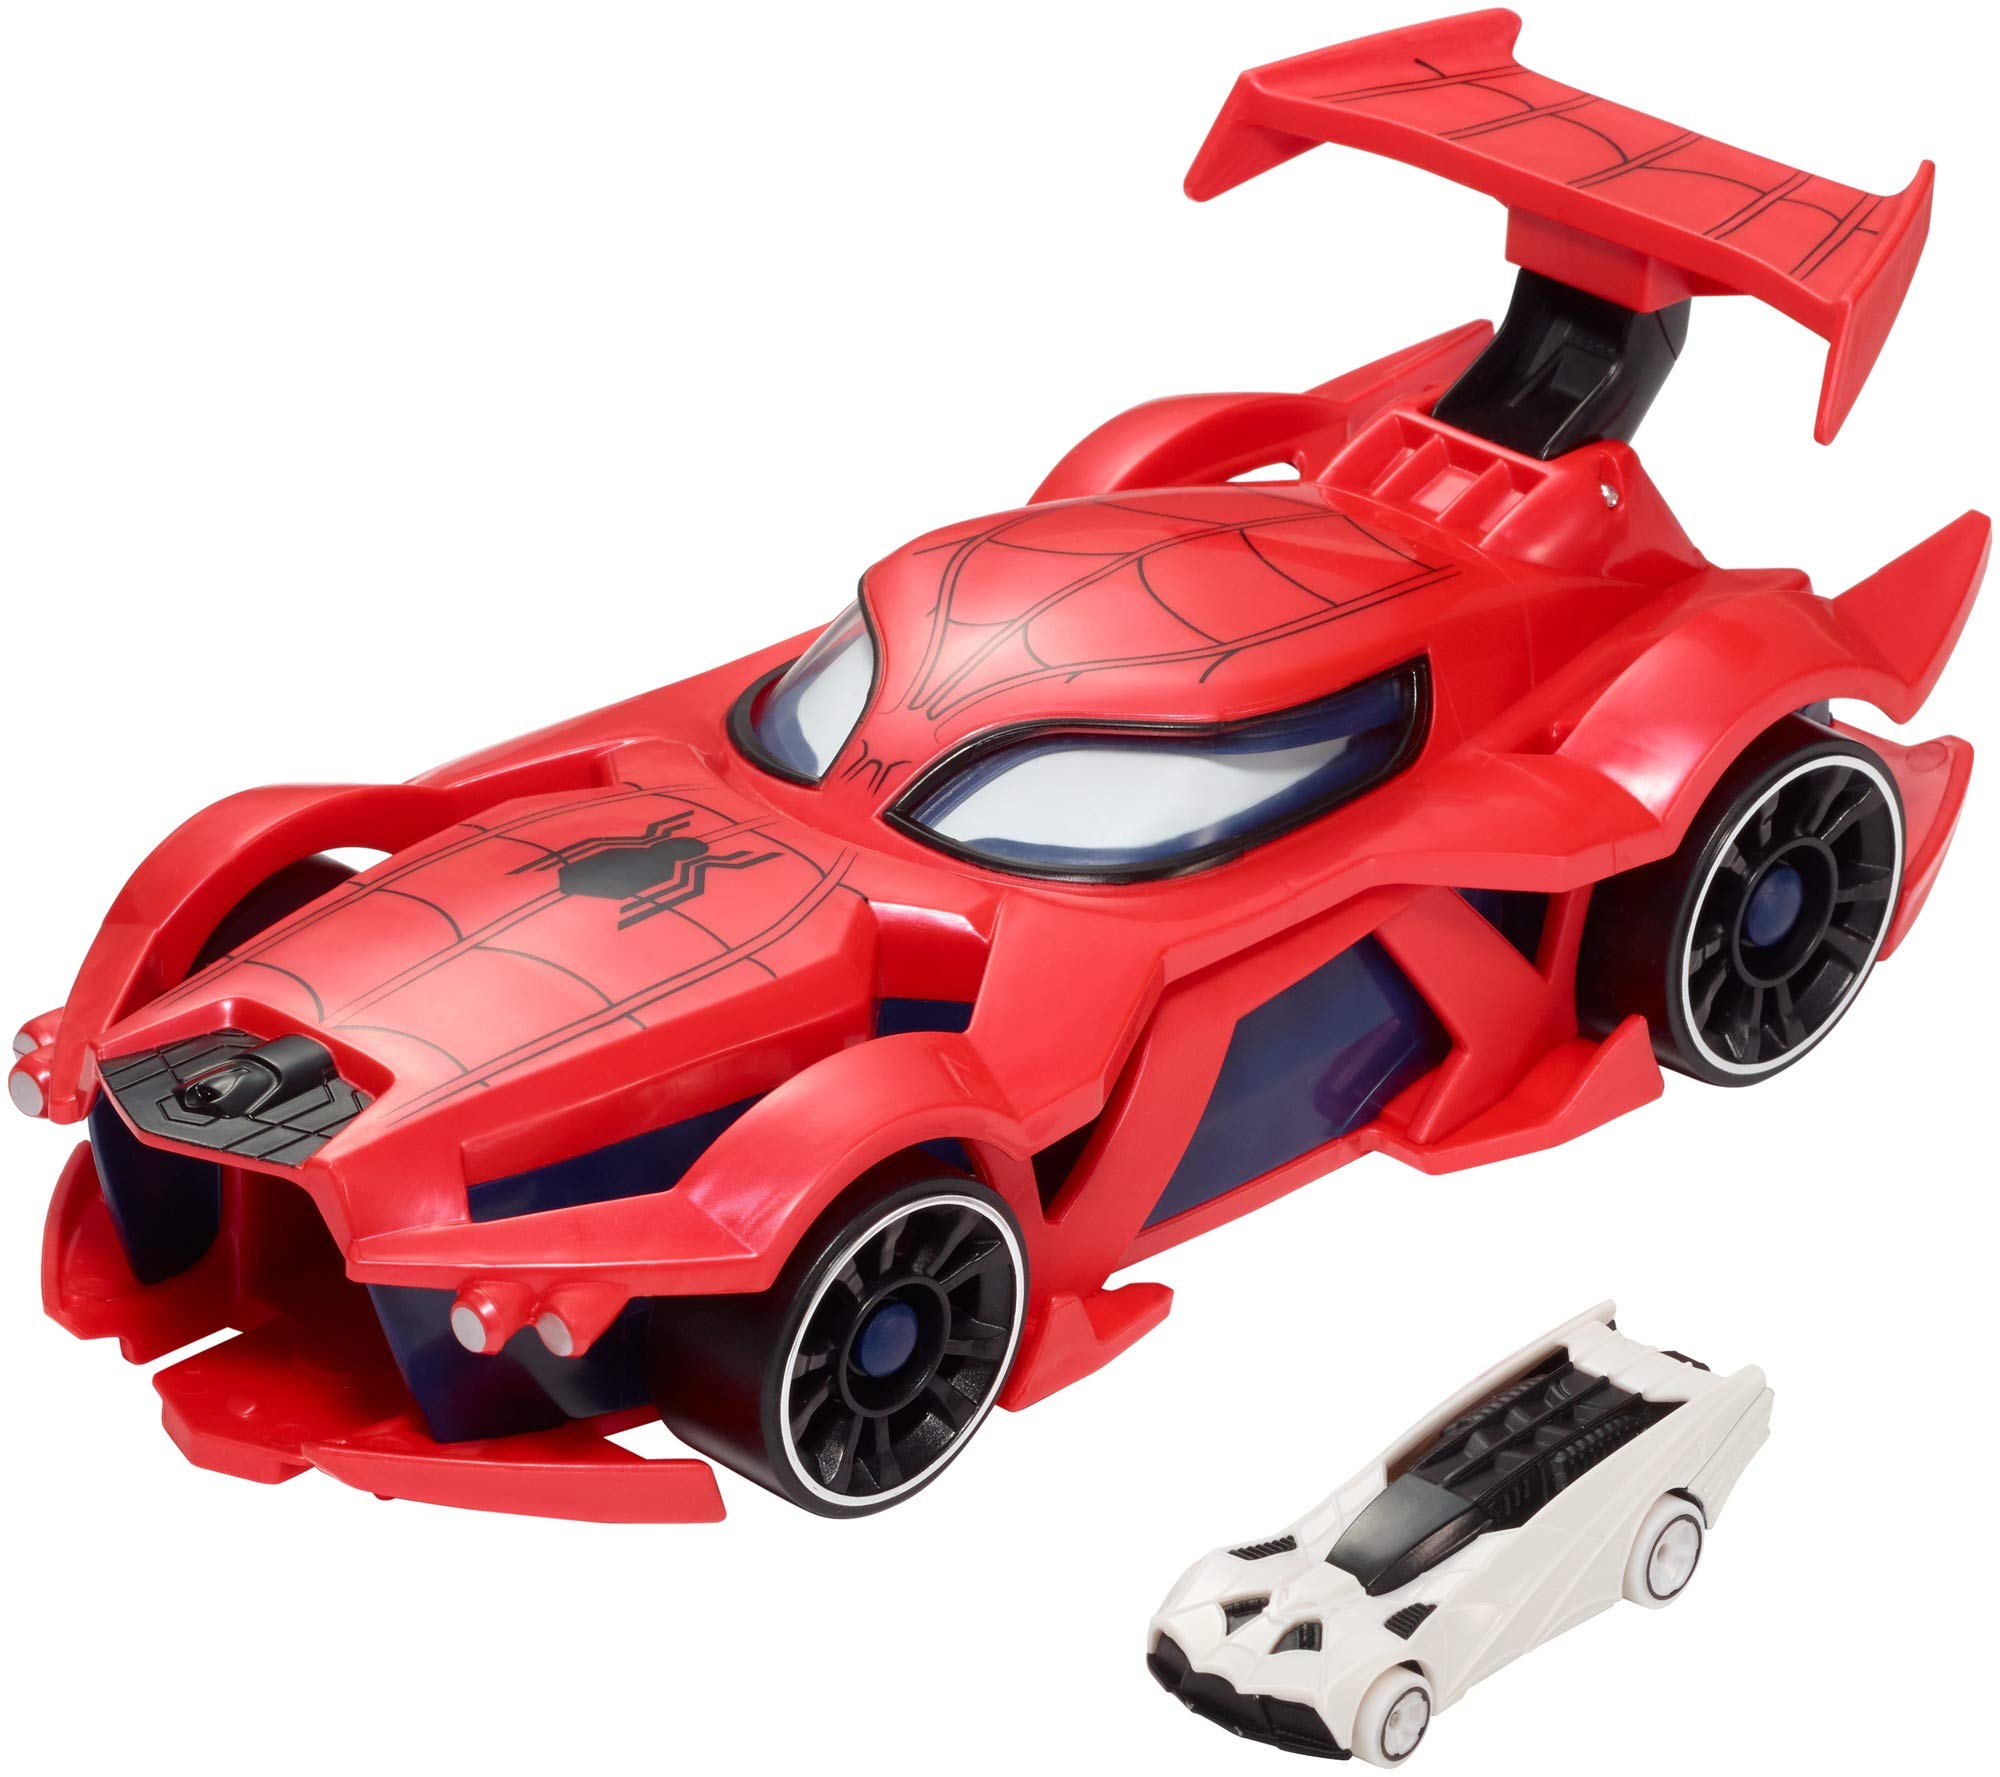 Total 57+ imagen spiderman car toy